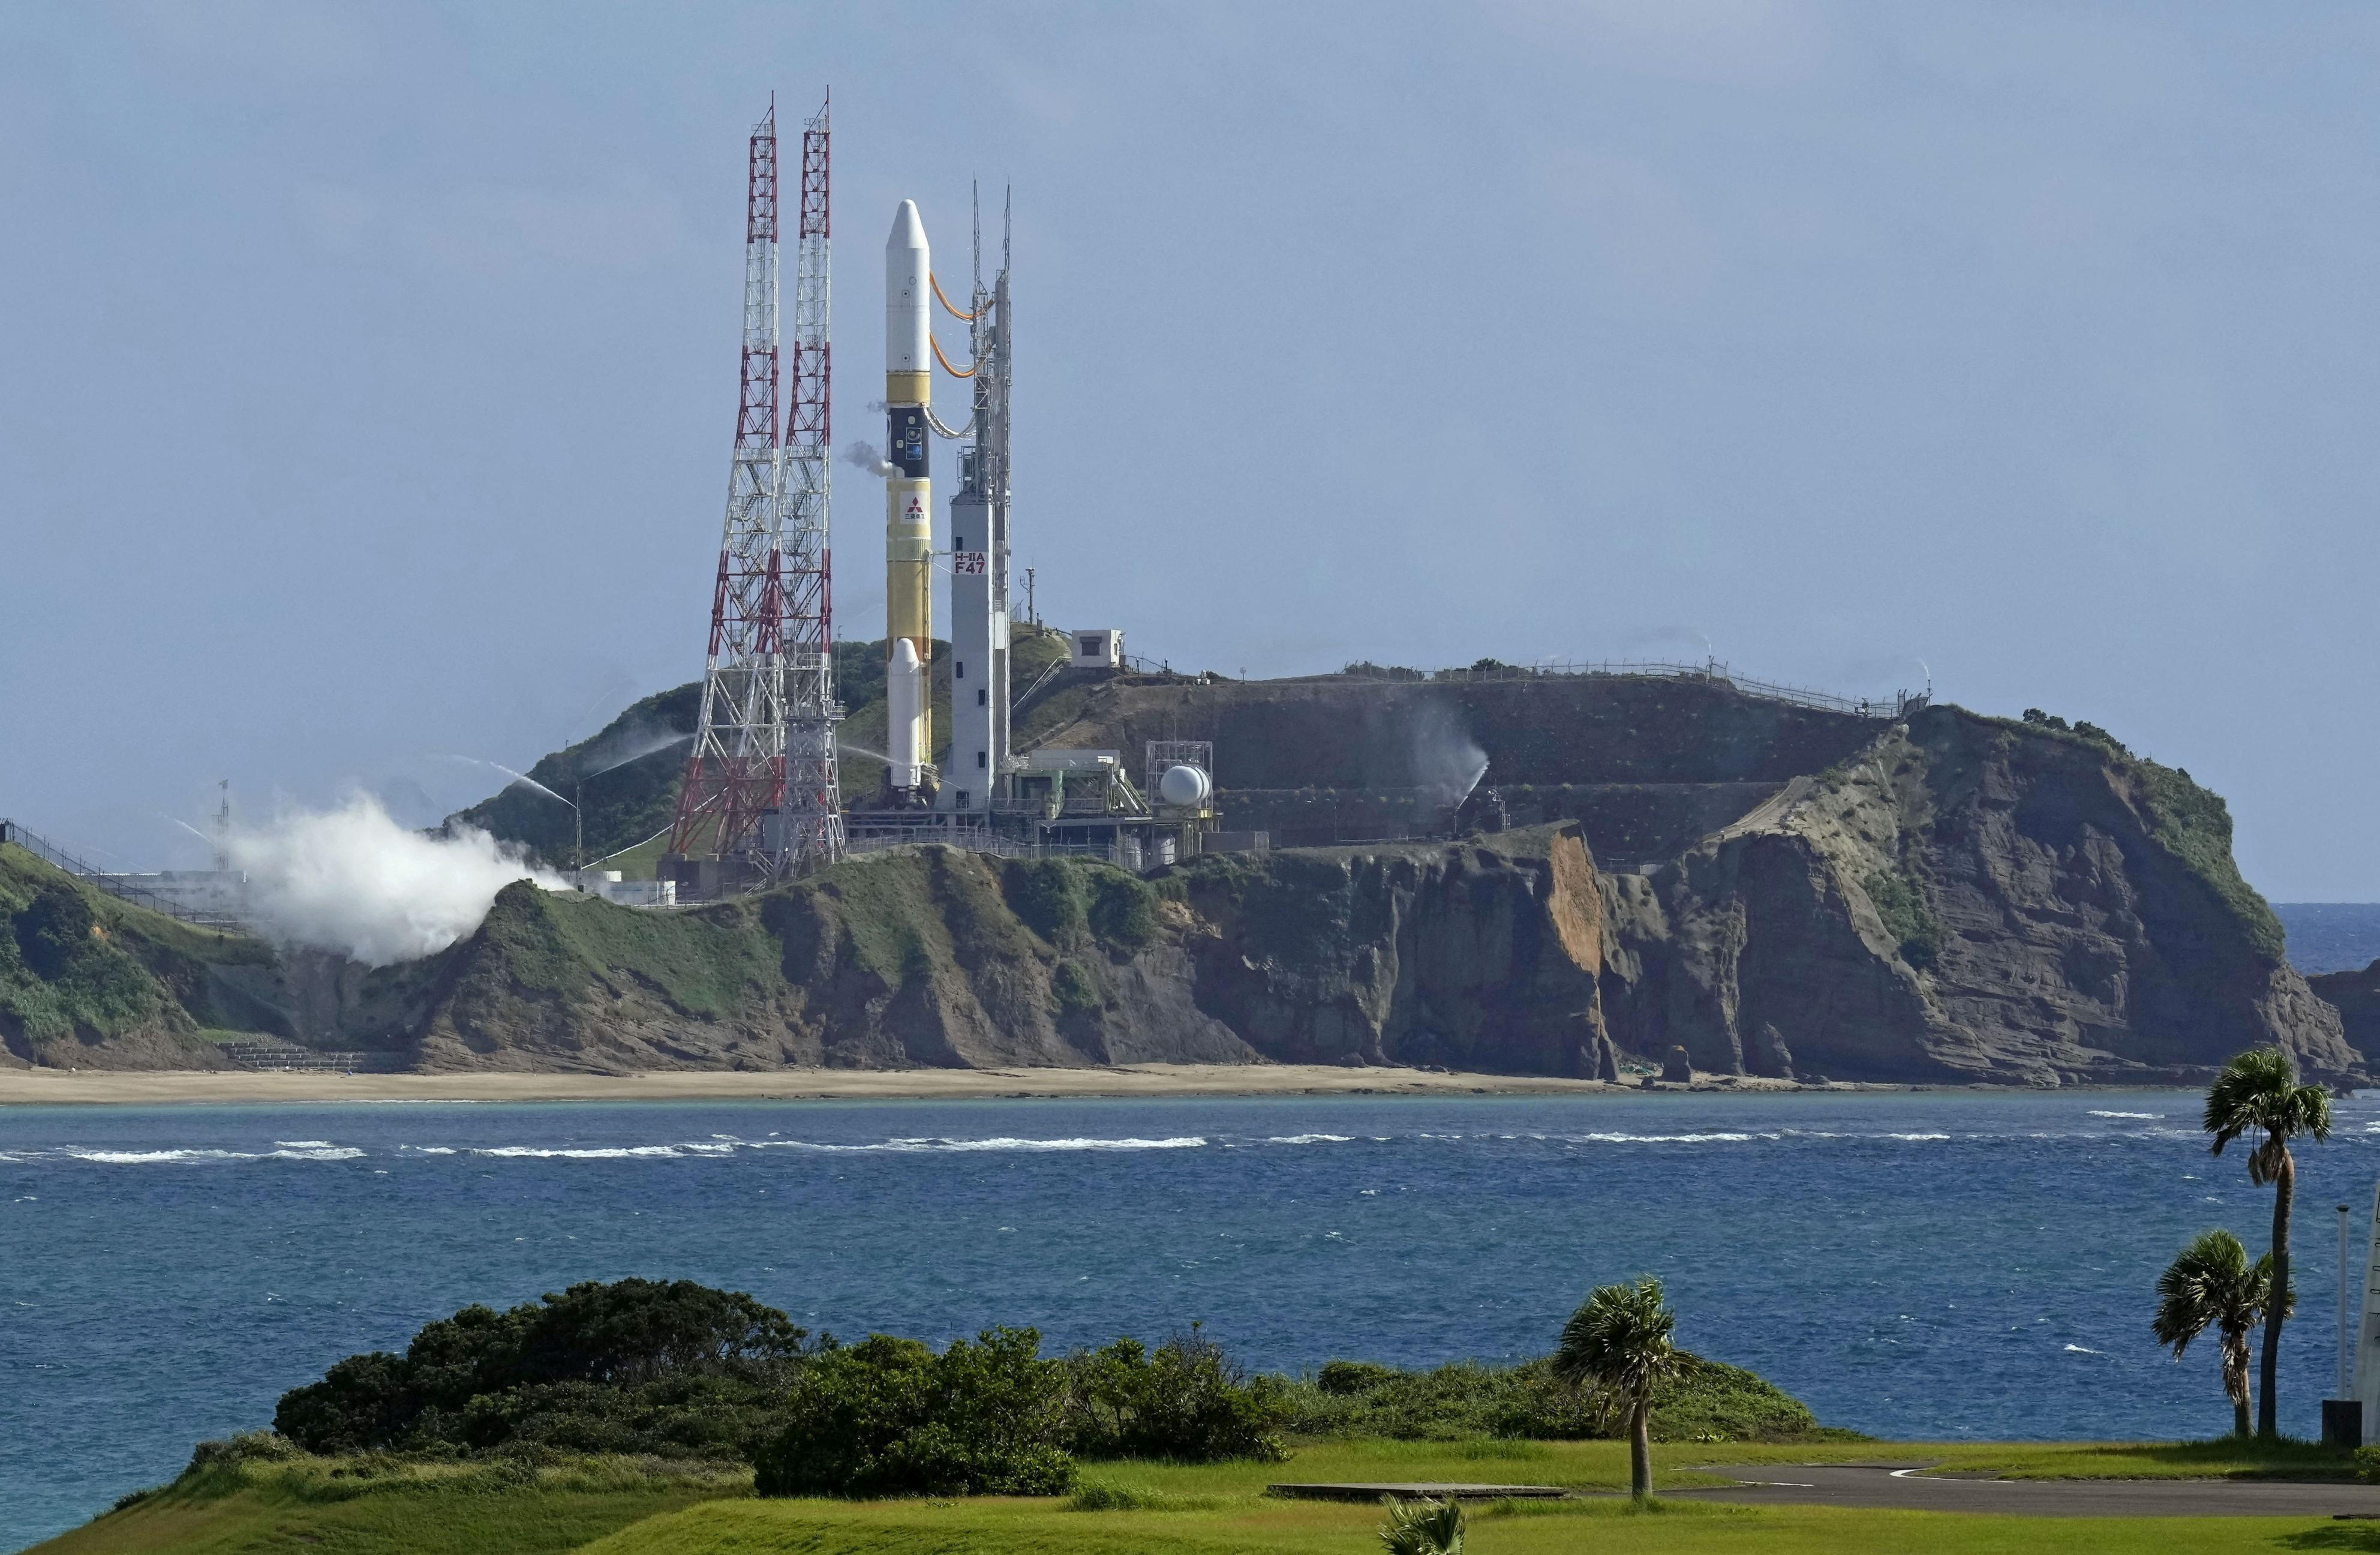 H-IIA No. 47 is on the launching pad of the Tanegashima Space Center on the southwestern island of Tanegashima.